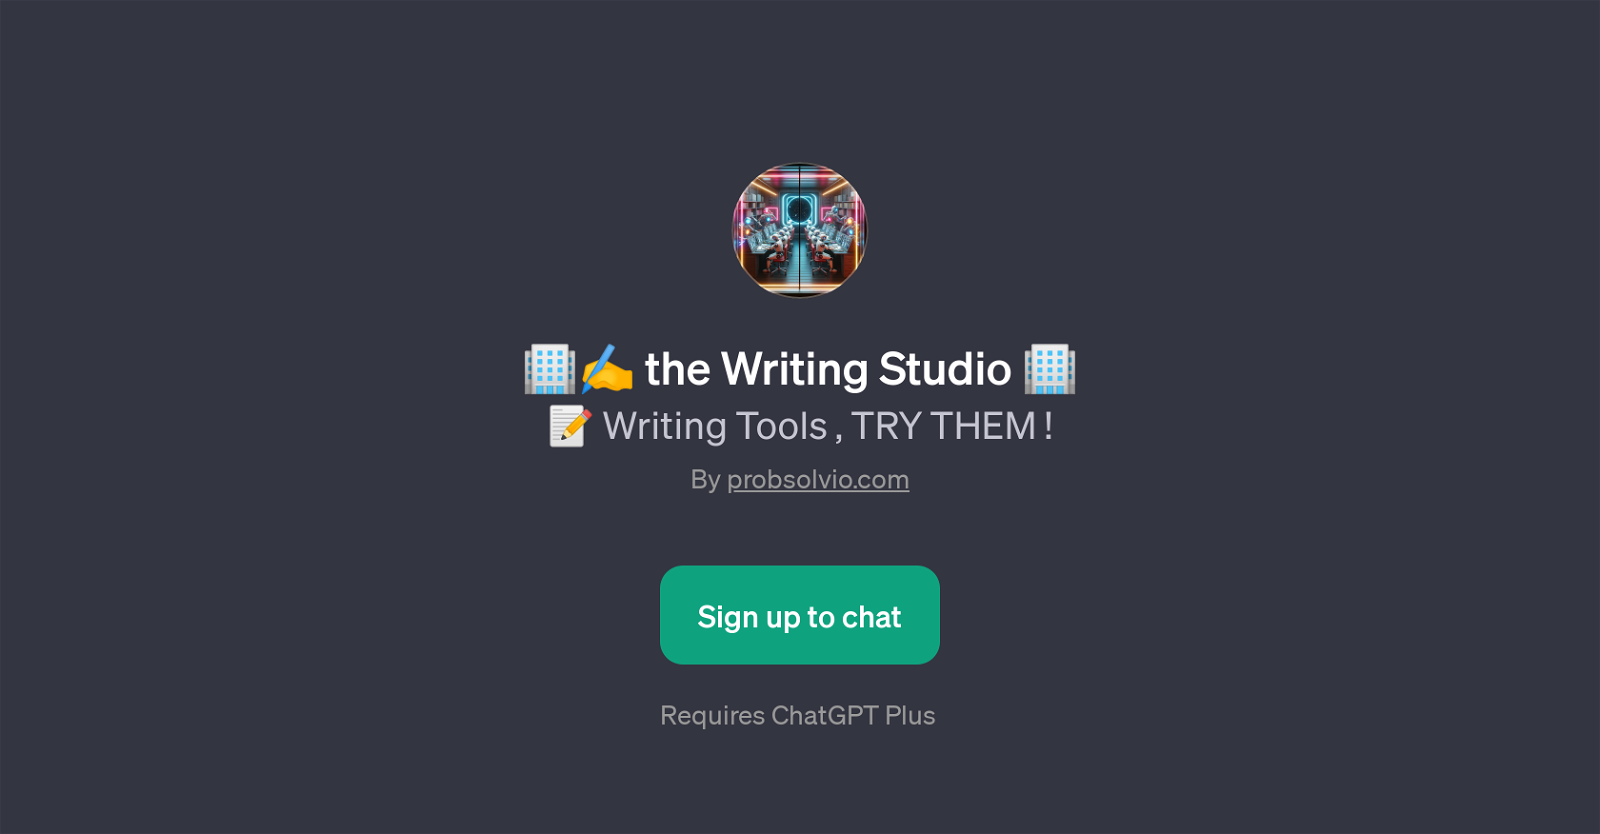 The Writing Studio website